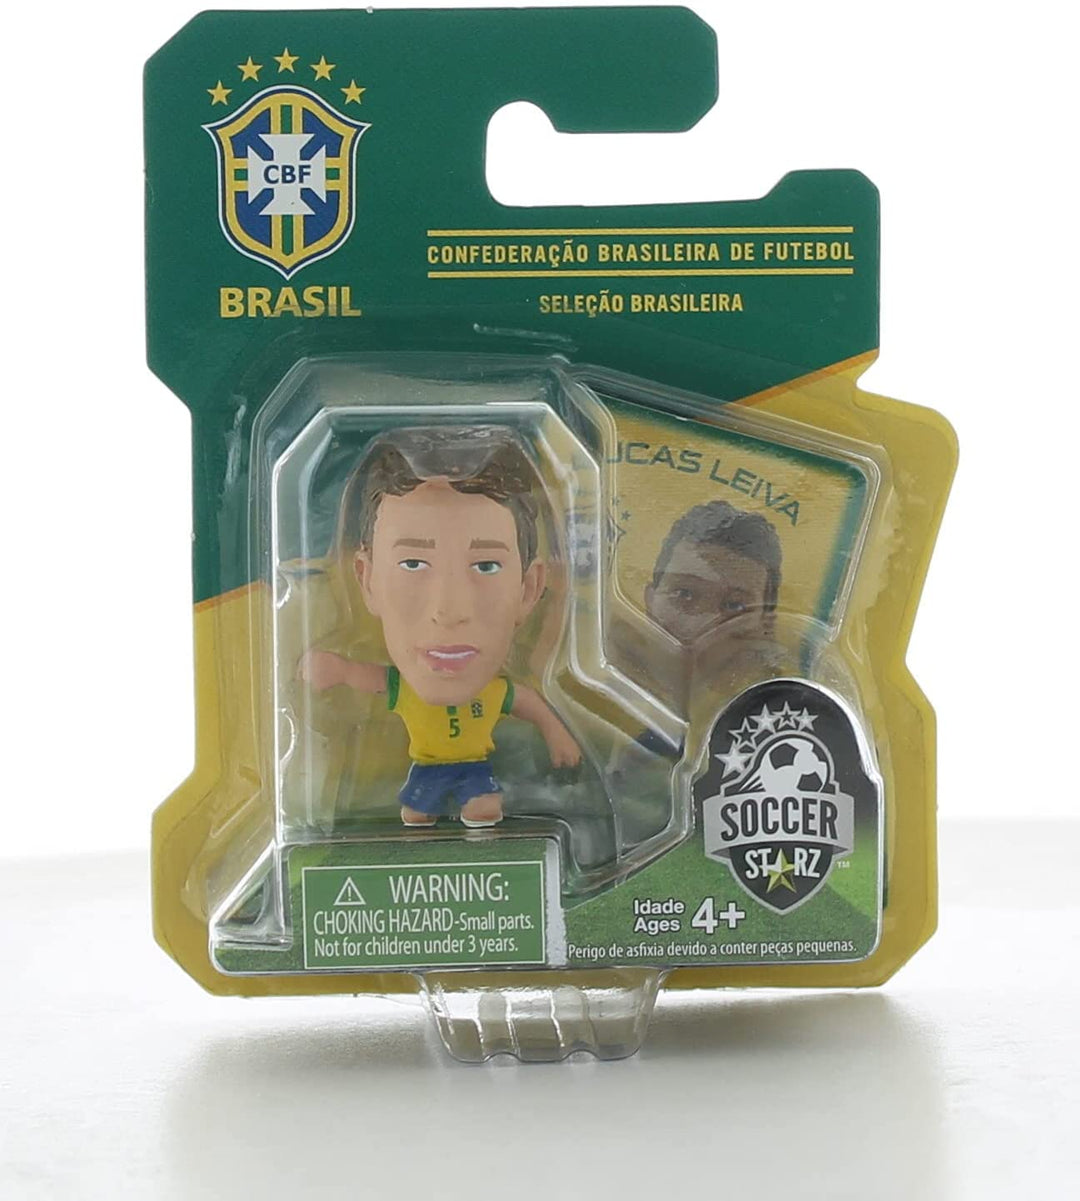 SoccerStarz Brasil International Figurine Blister Pack con el kit de local de Lucas Leiva